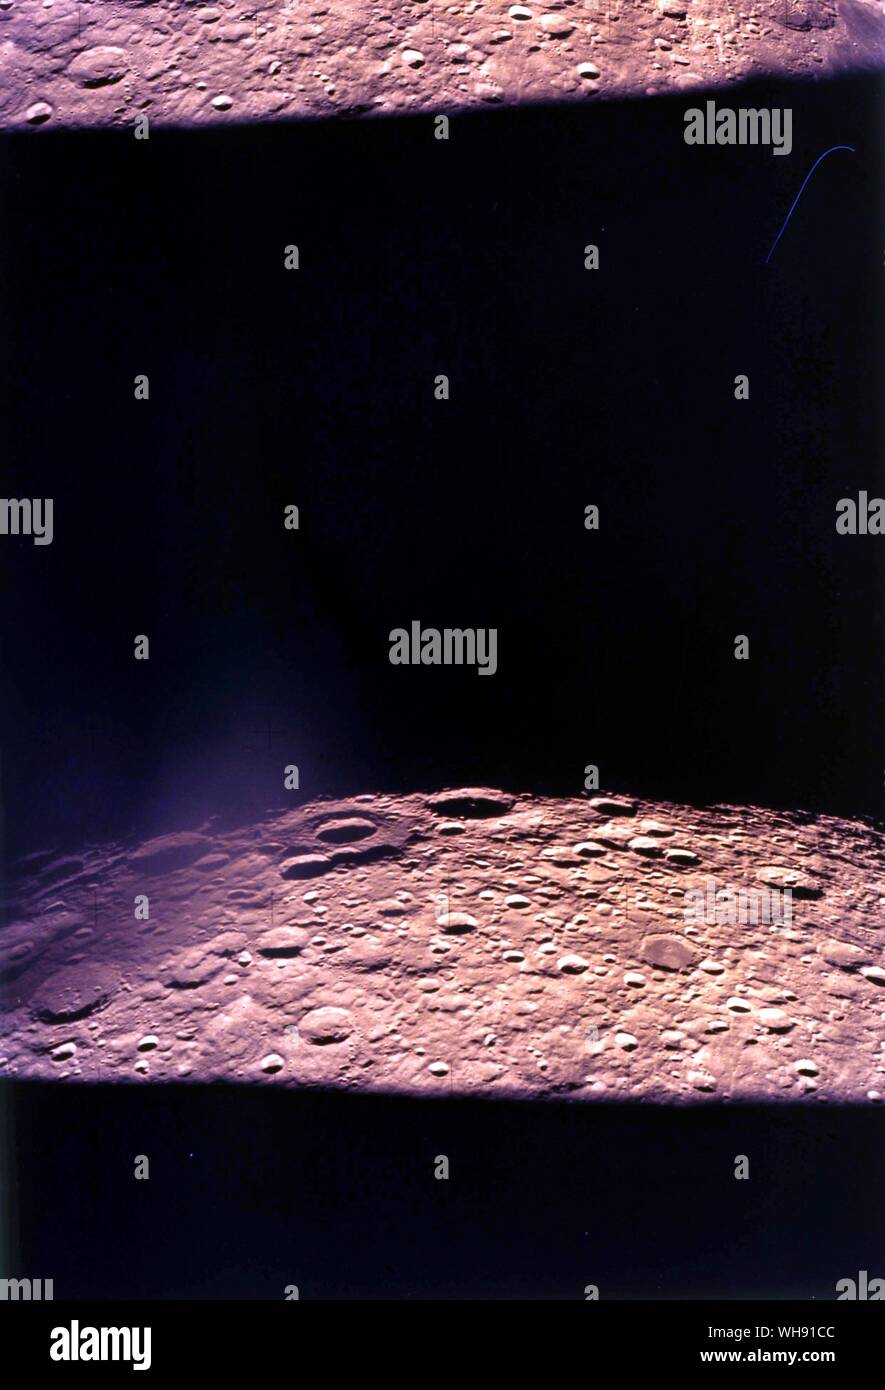 Platz - Mond/Apollo 13 auf dem Mond Stockfoto